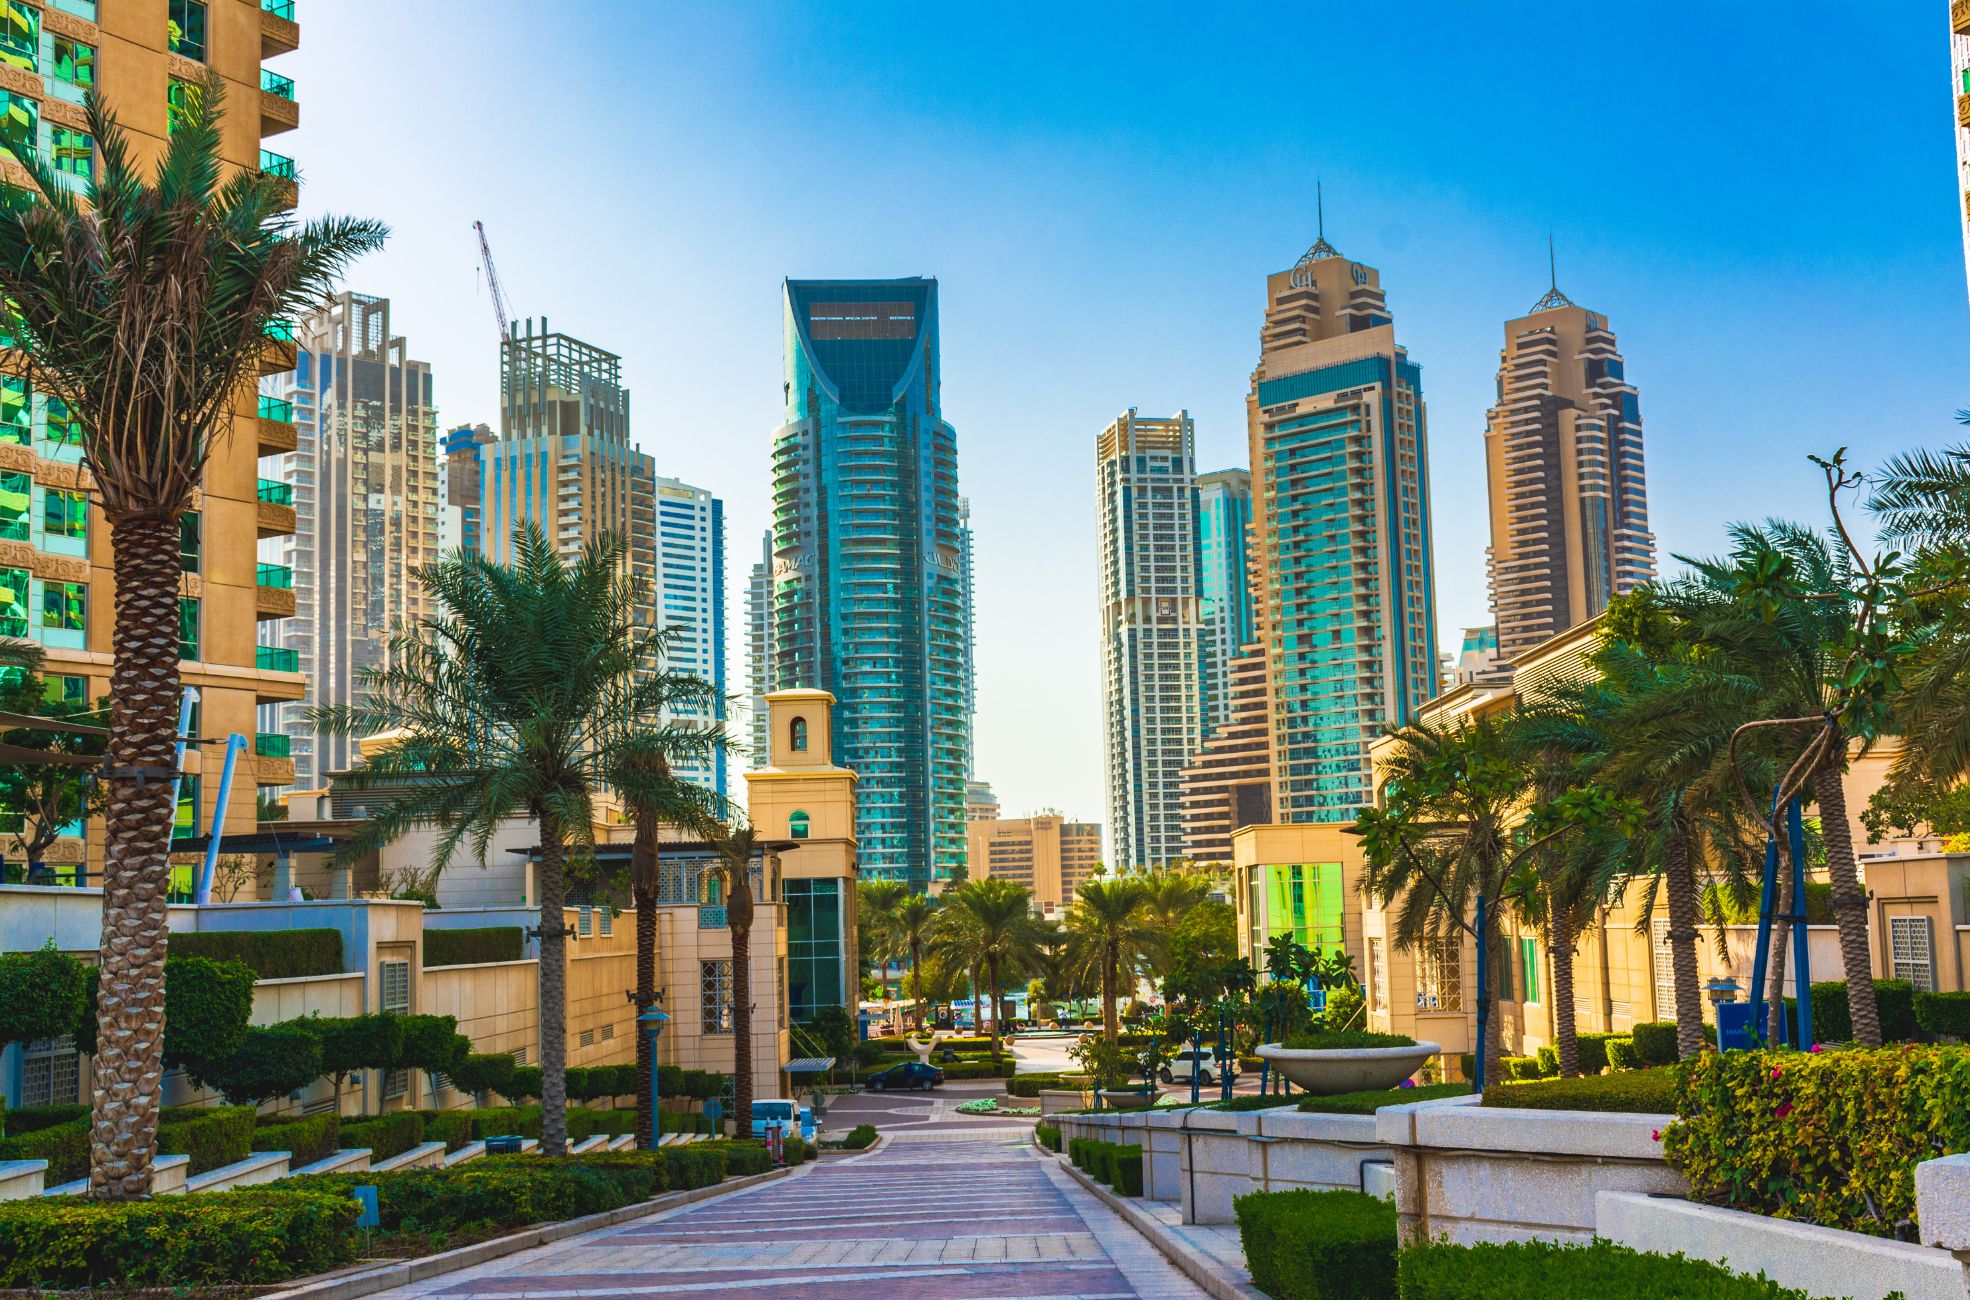 Dubai City Boulevard during the daytime.